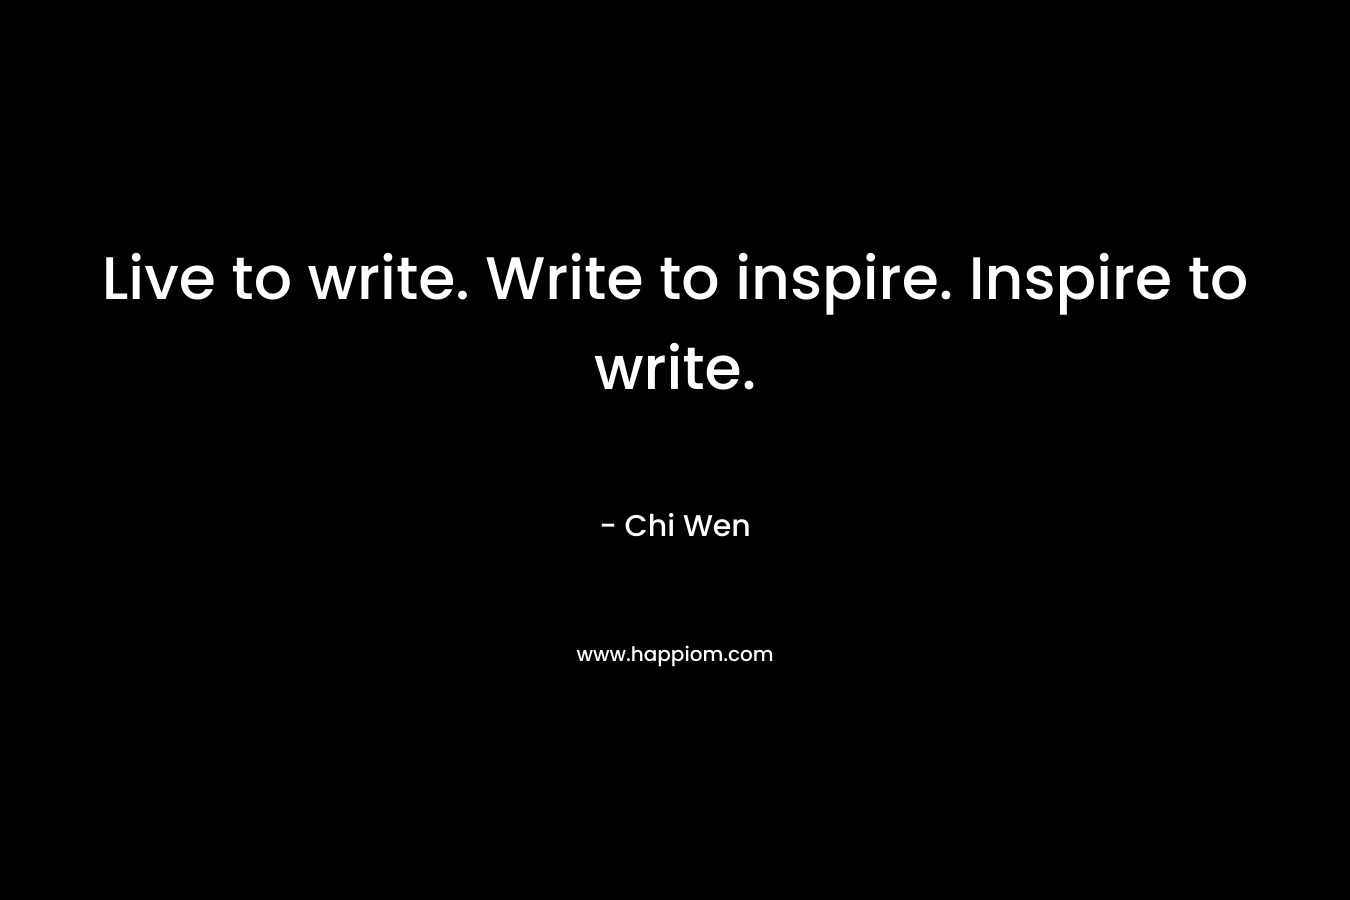 Live to write. Write to inspire. Inspire to write.